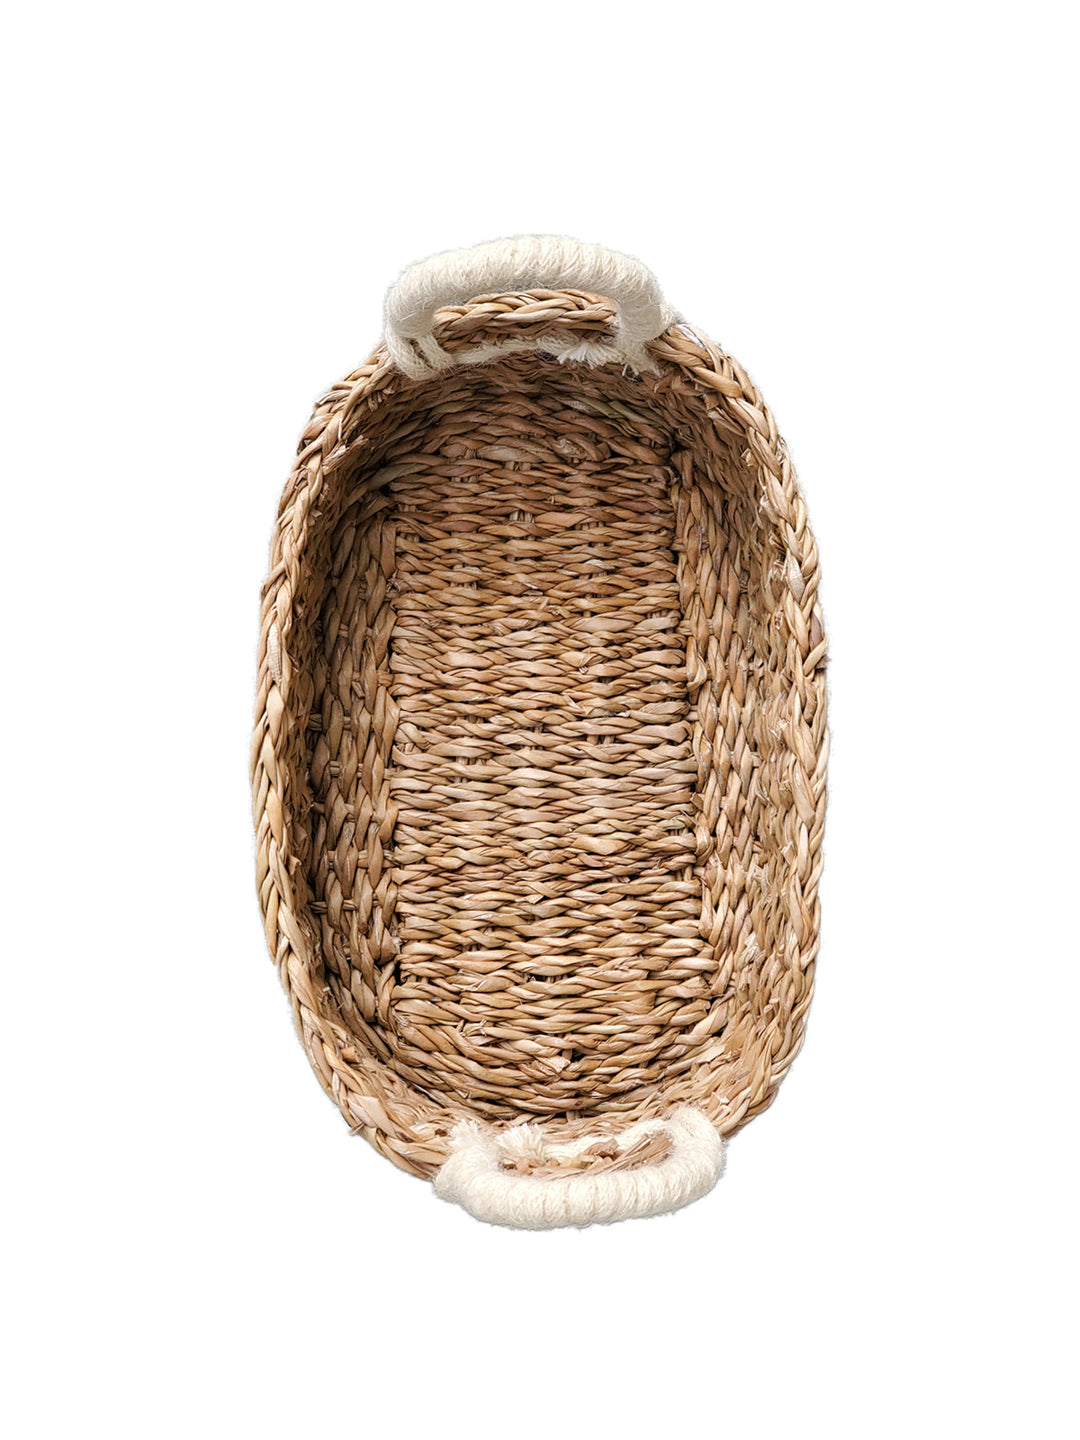 Savar Oval Bread Basket-2